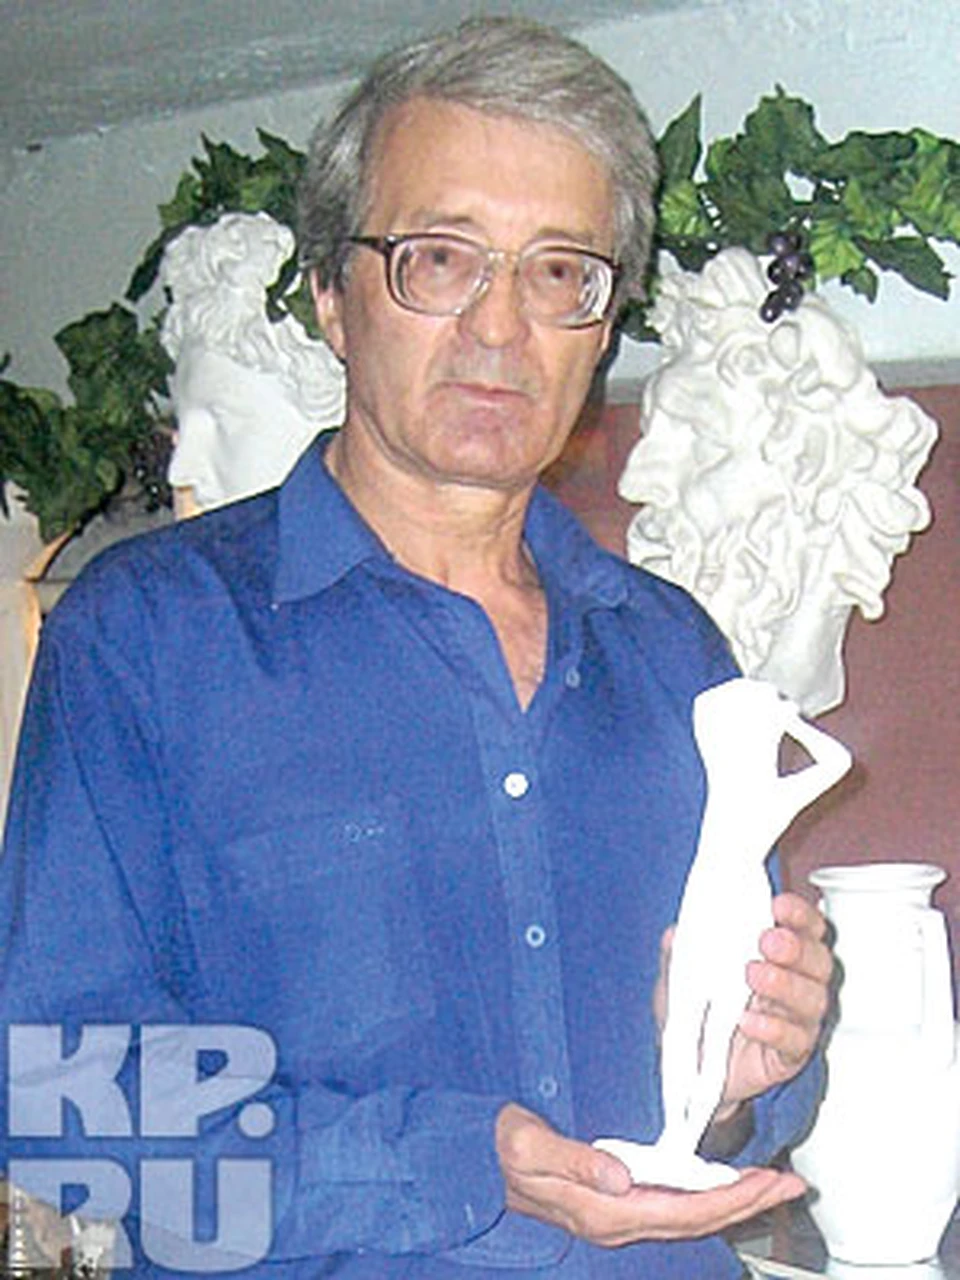 Валерий Гаврилов